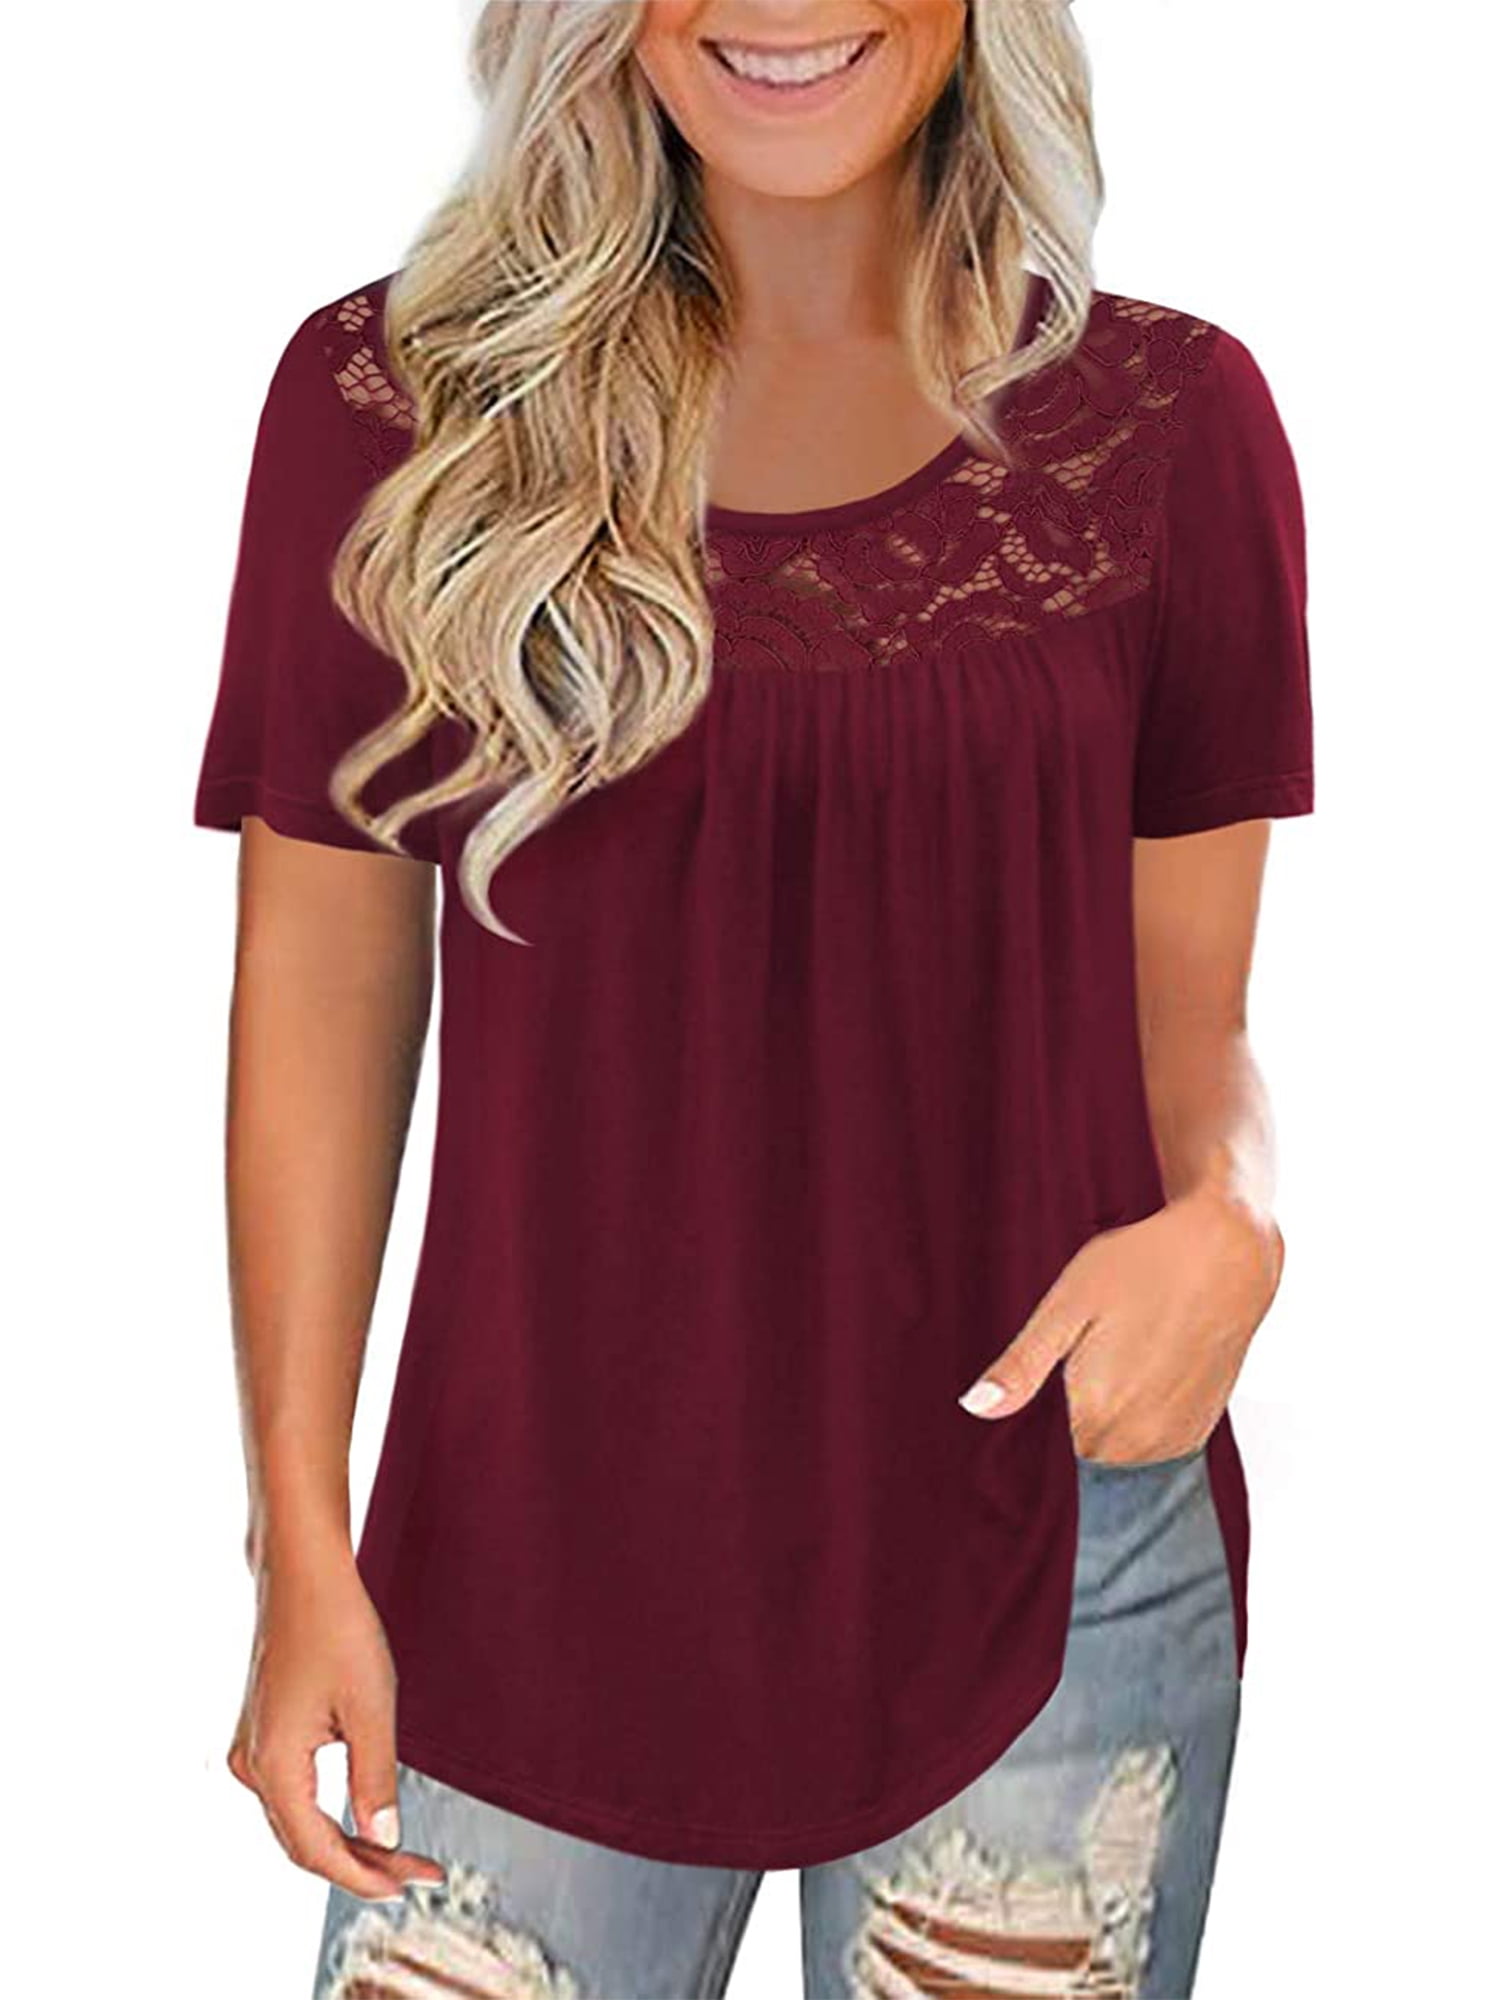 Details about   Women Velvet T-shirts Tops Tee Short Sleeve Loose Basic Shirt Blouse Casual Soft